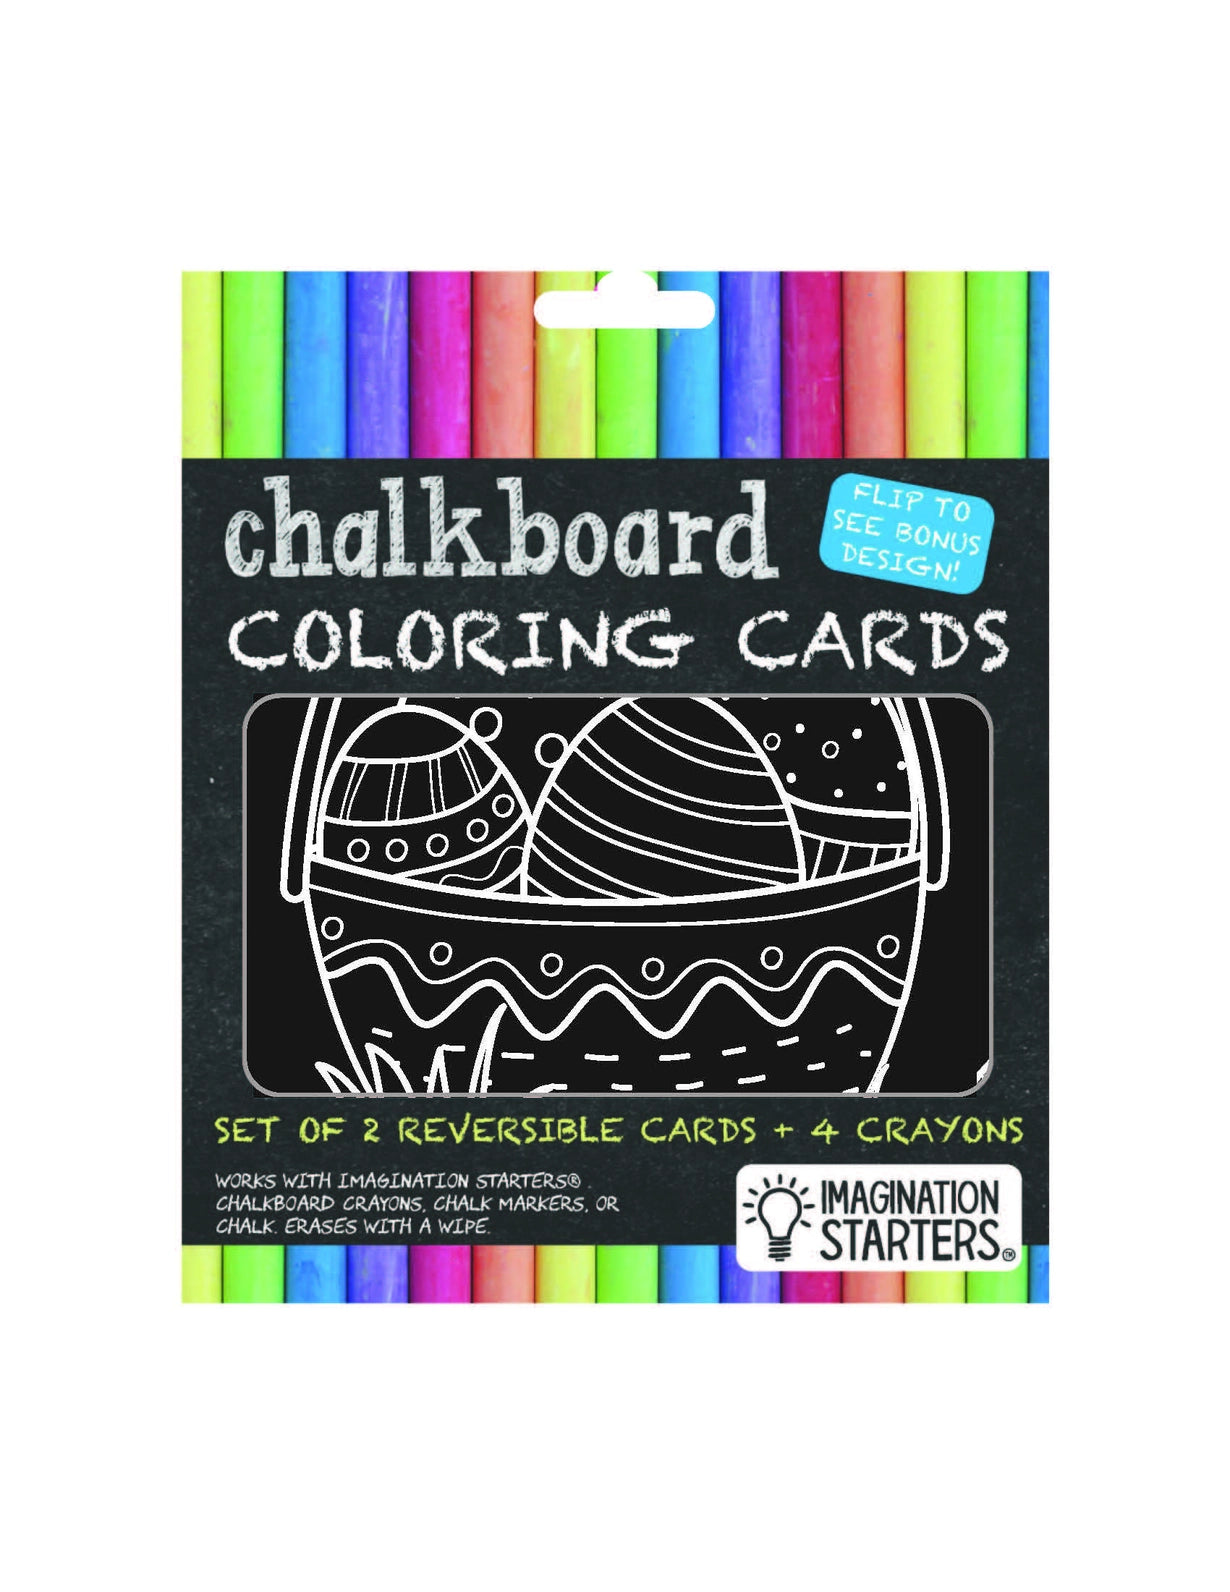 Chalkboard Minimat Easter Coloring Kit